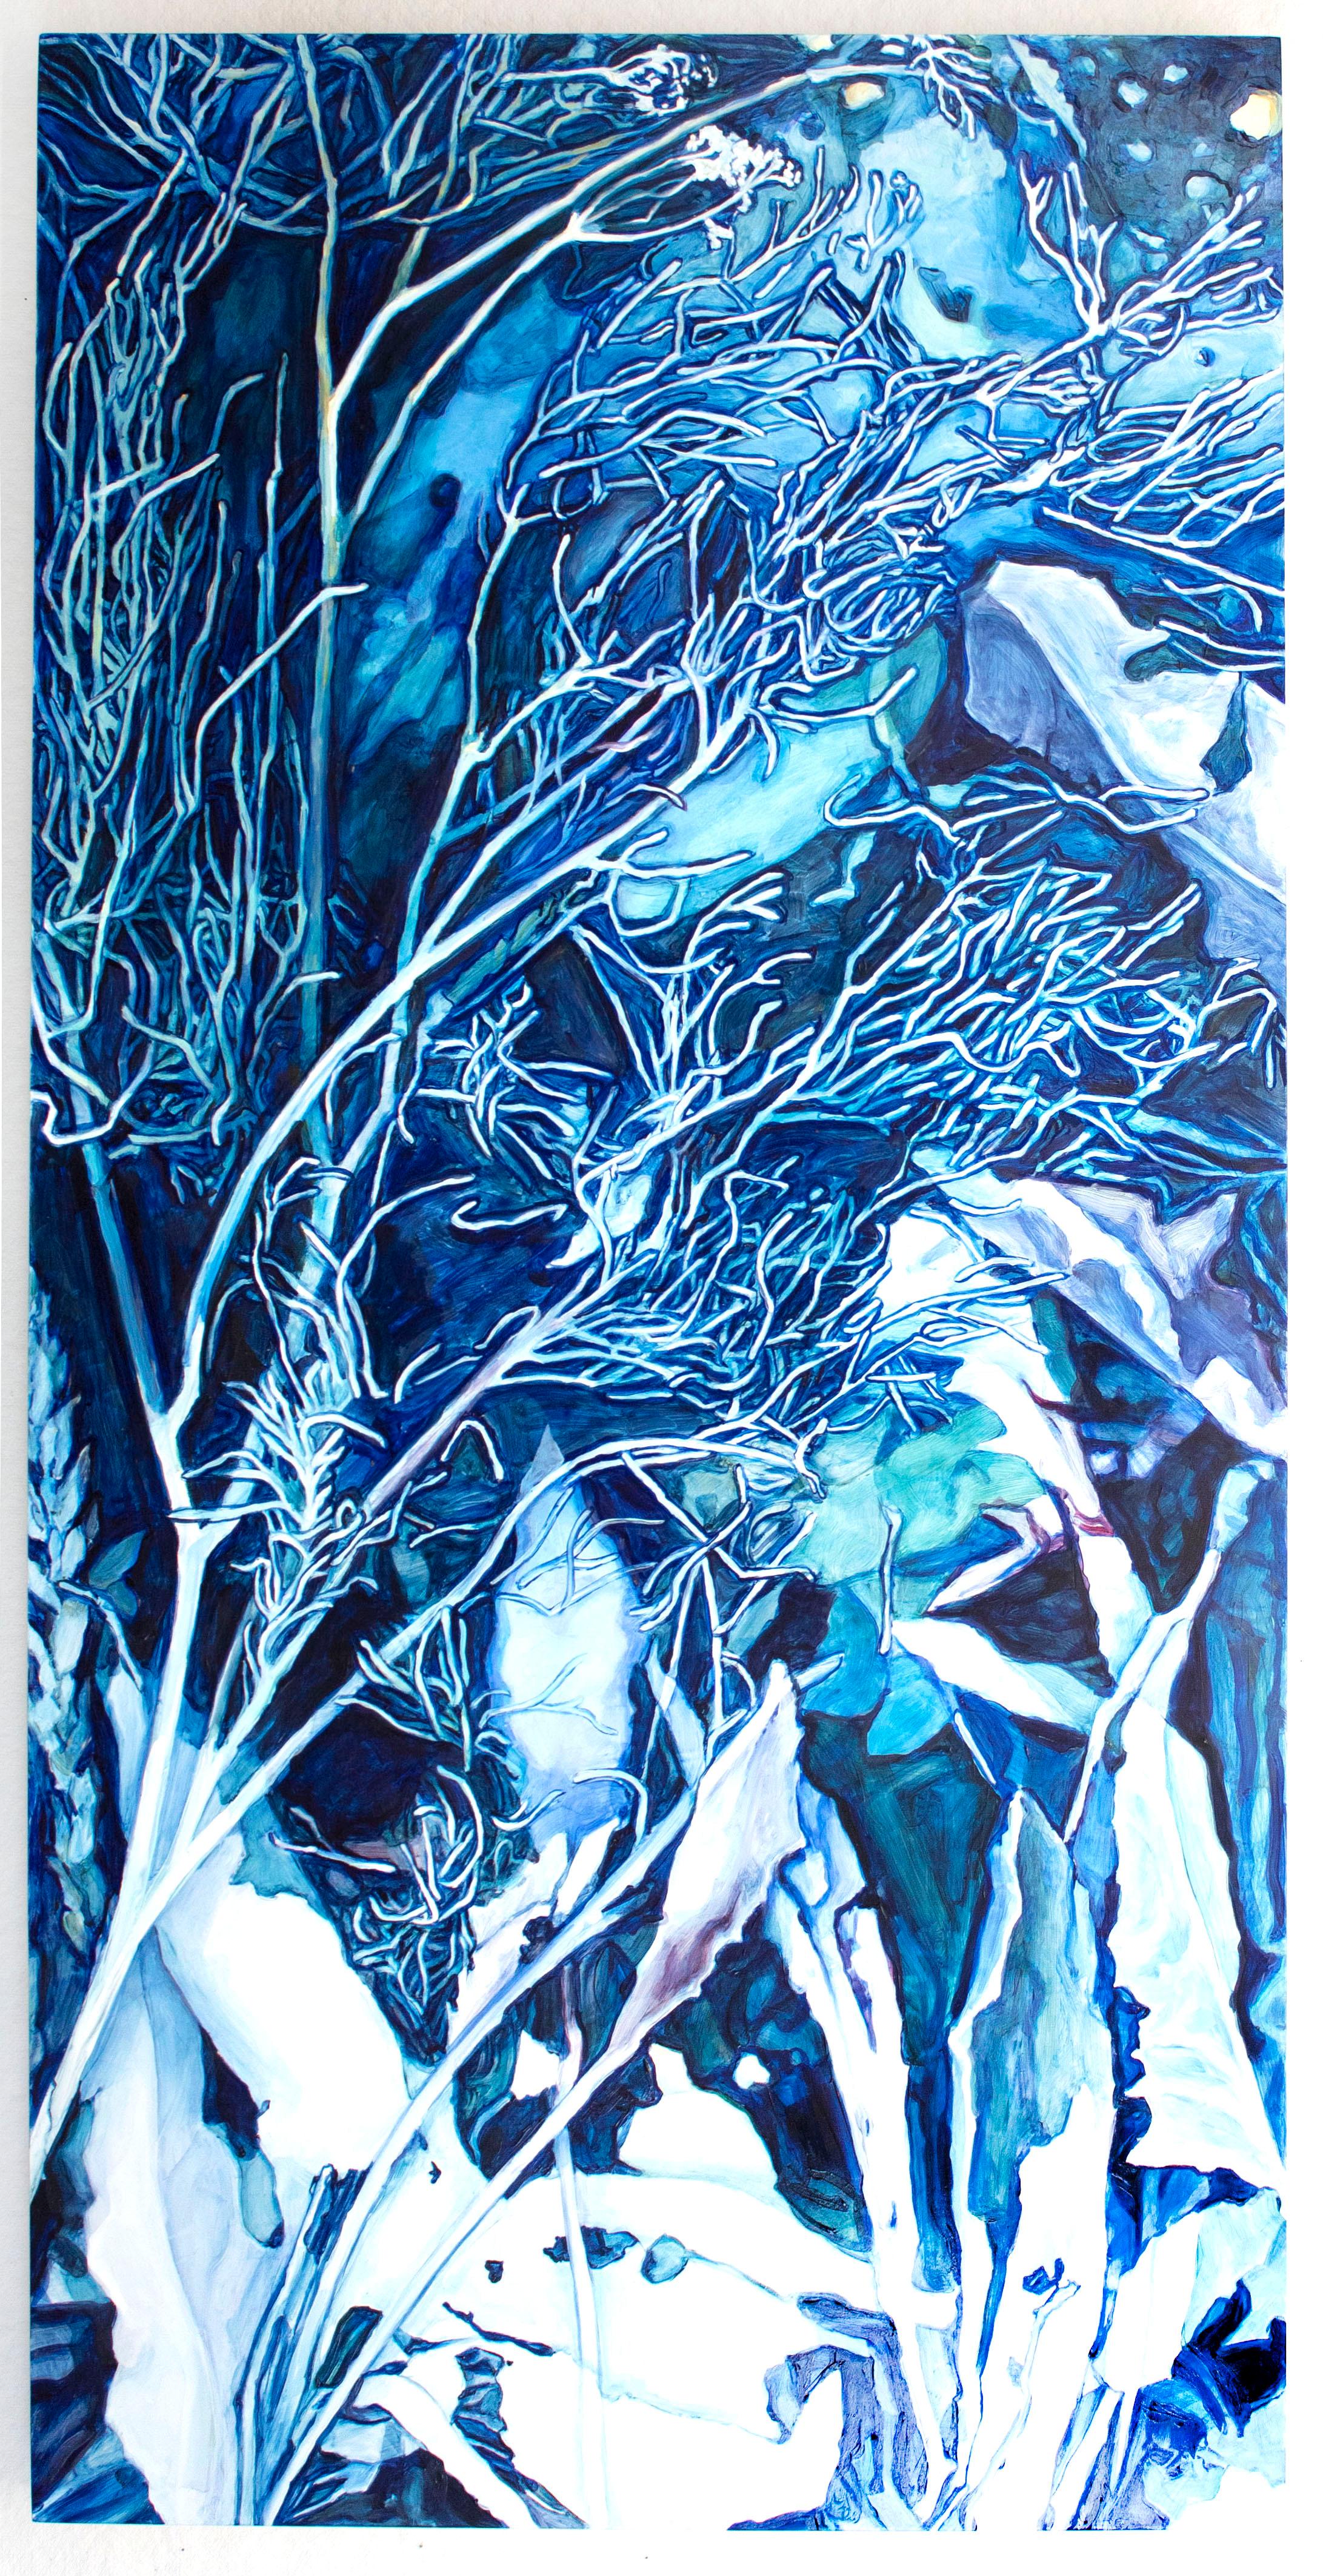 Figurative Painting Amanda Besl - Contemporary Figurative Still Life Flora Cyanotype Blue Aquatic Oil Painting